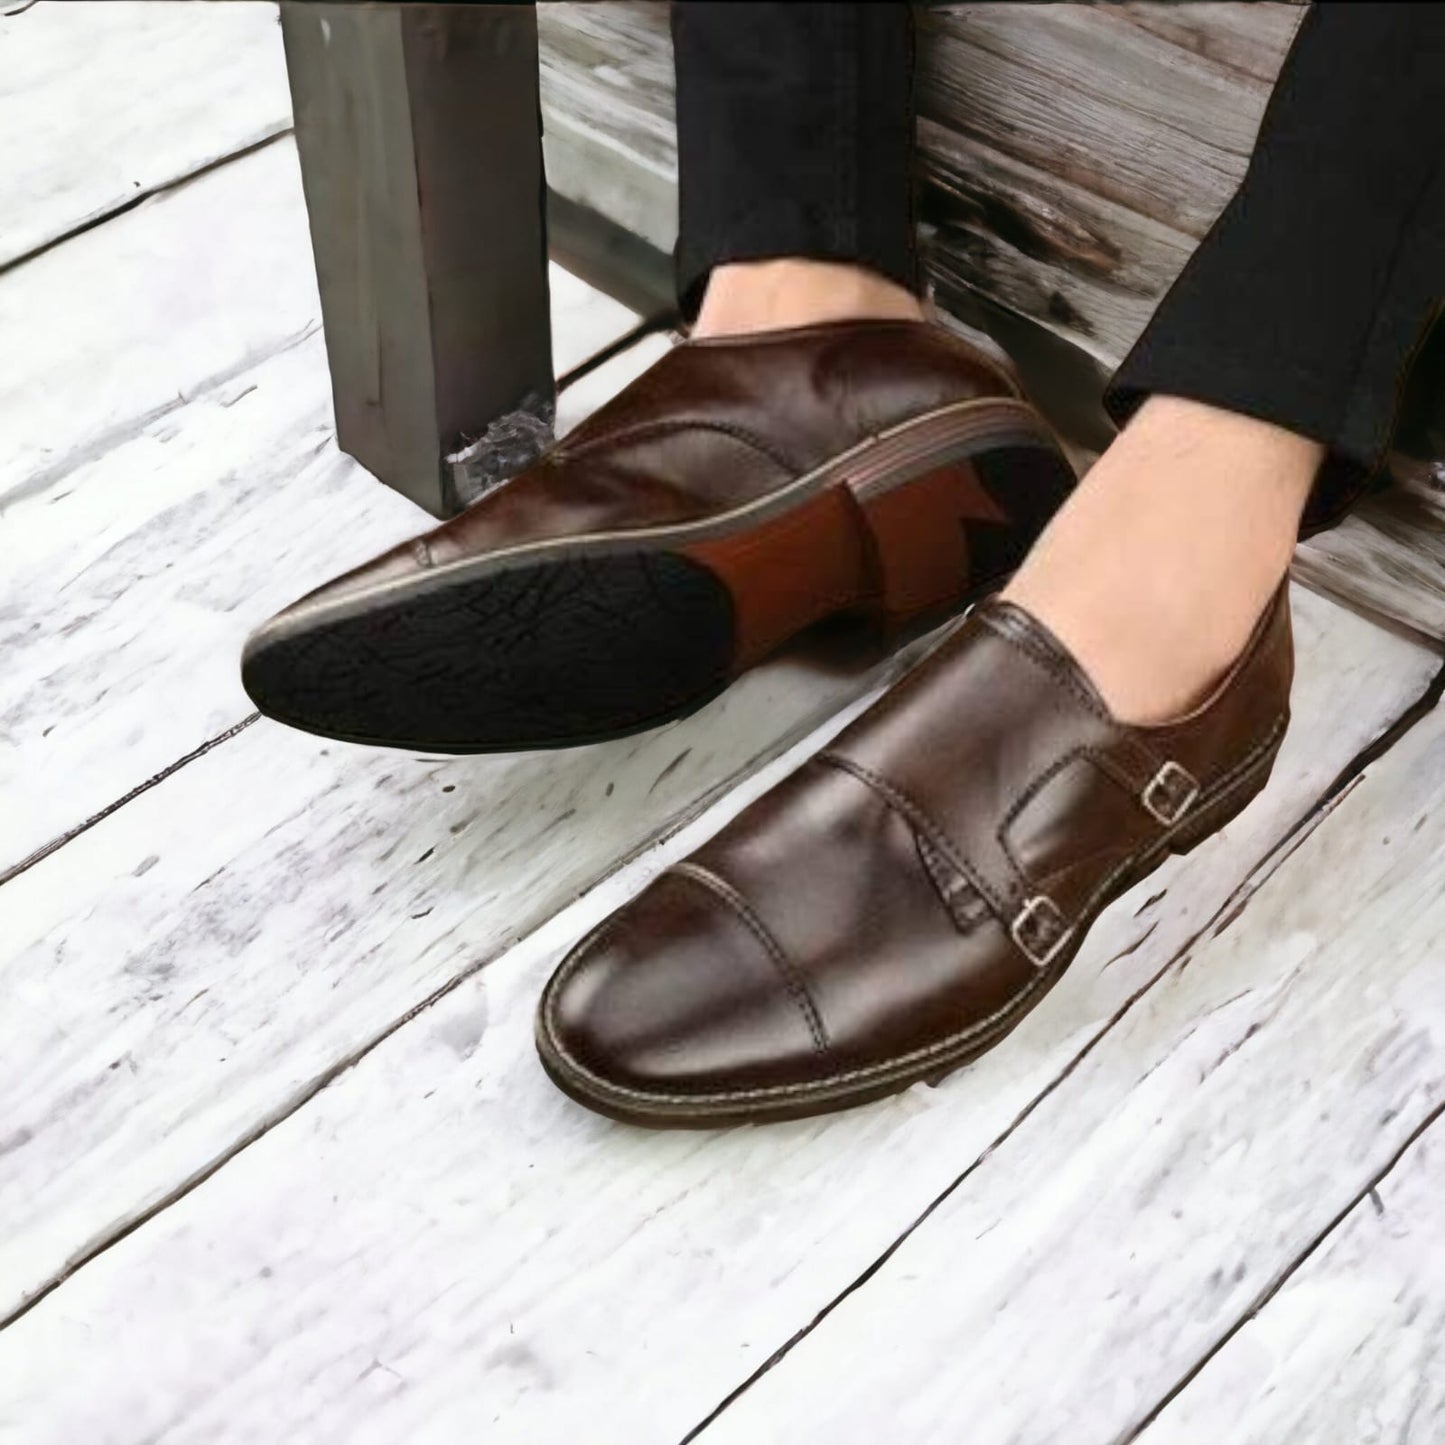 Jack Marc Double Monk Formal Shoes For Men Party Wear Casual Wear